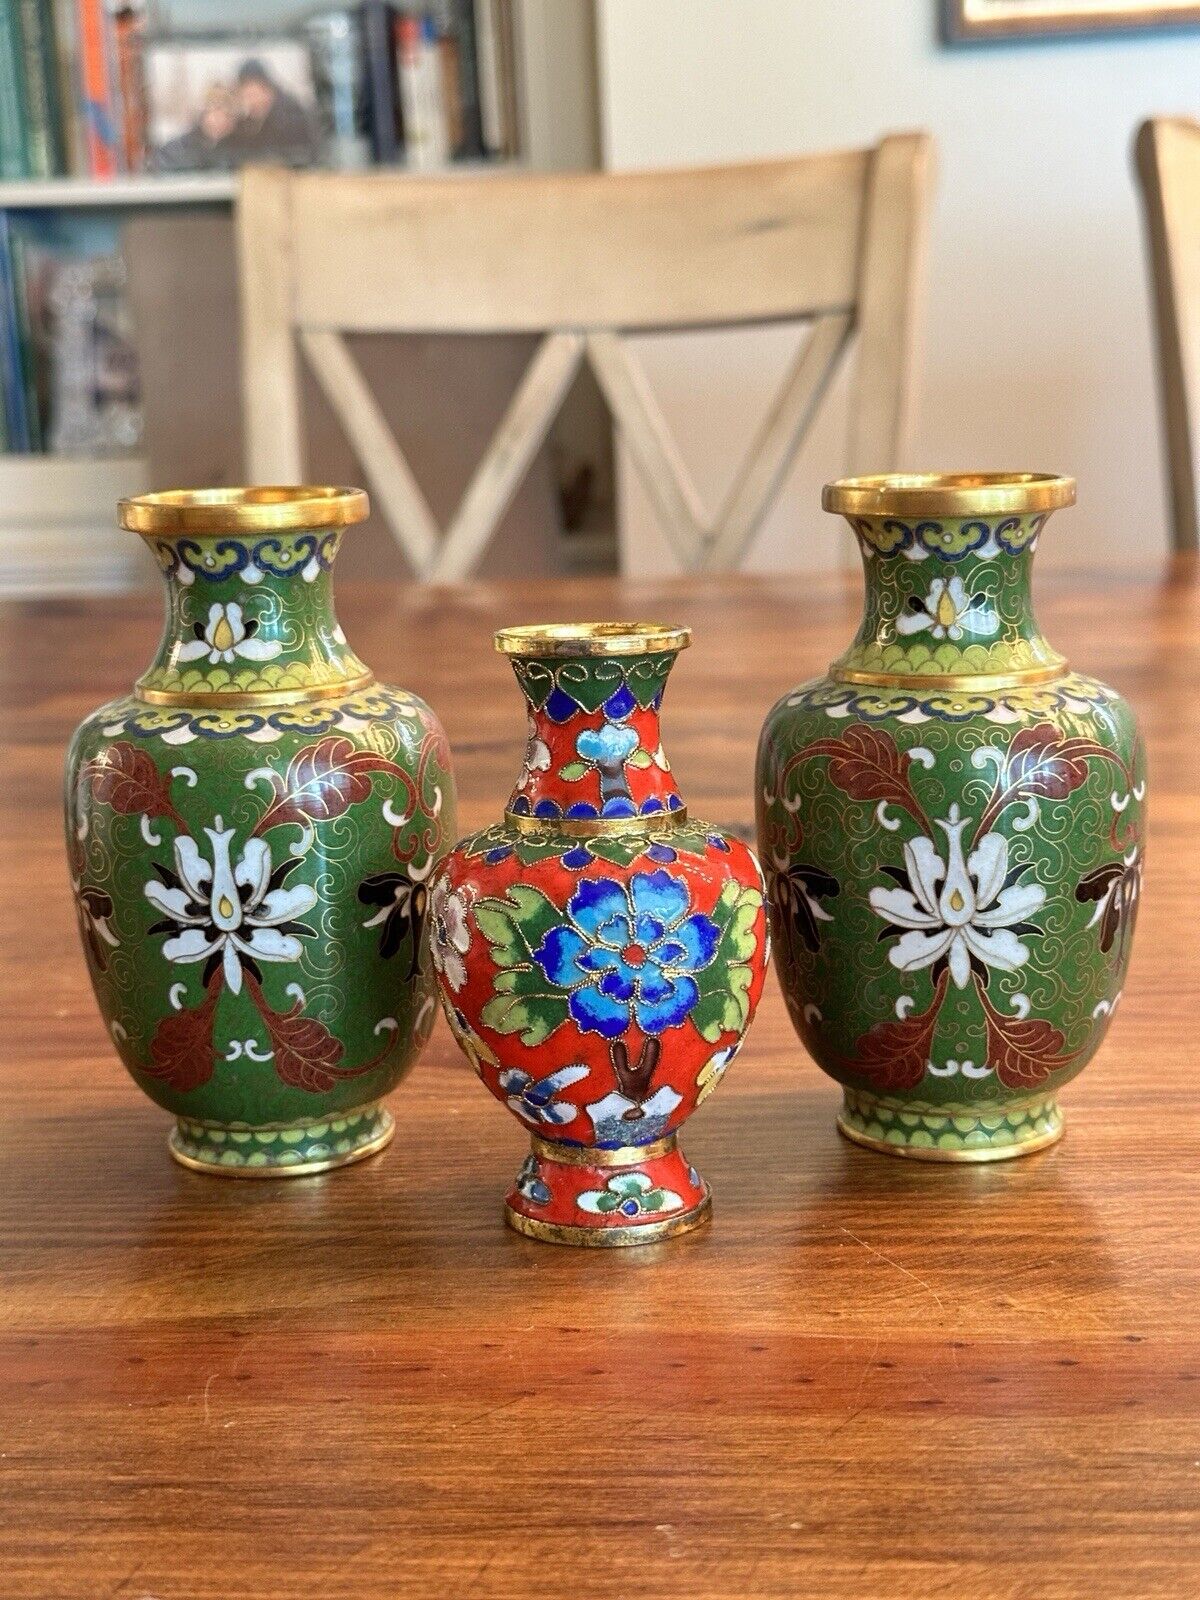 3 Vintage Metal or Brass Cloisonne Enamel Vases Flower patterns beautiful set